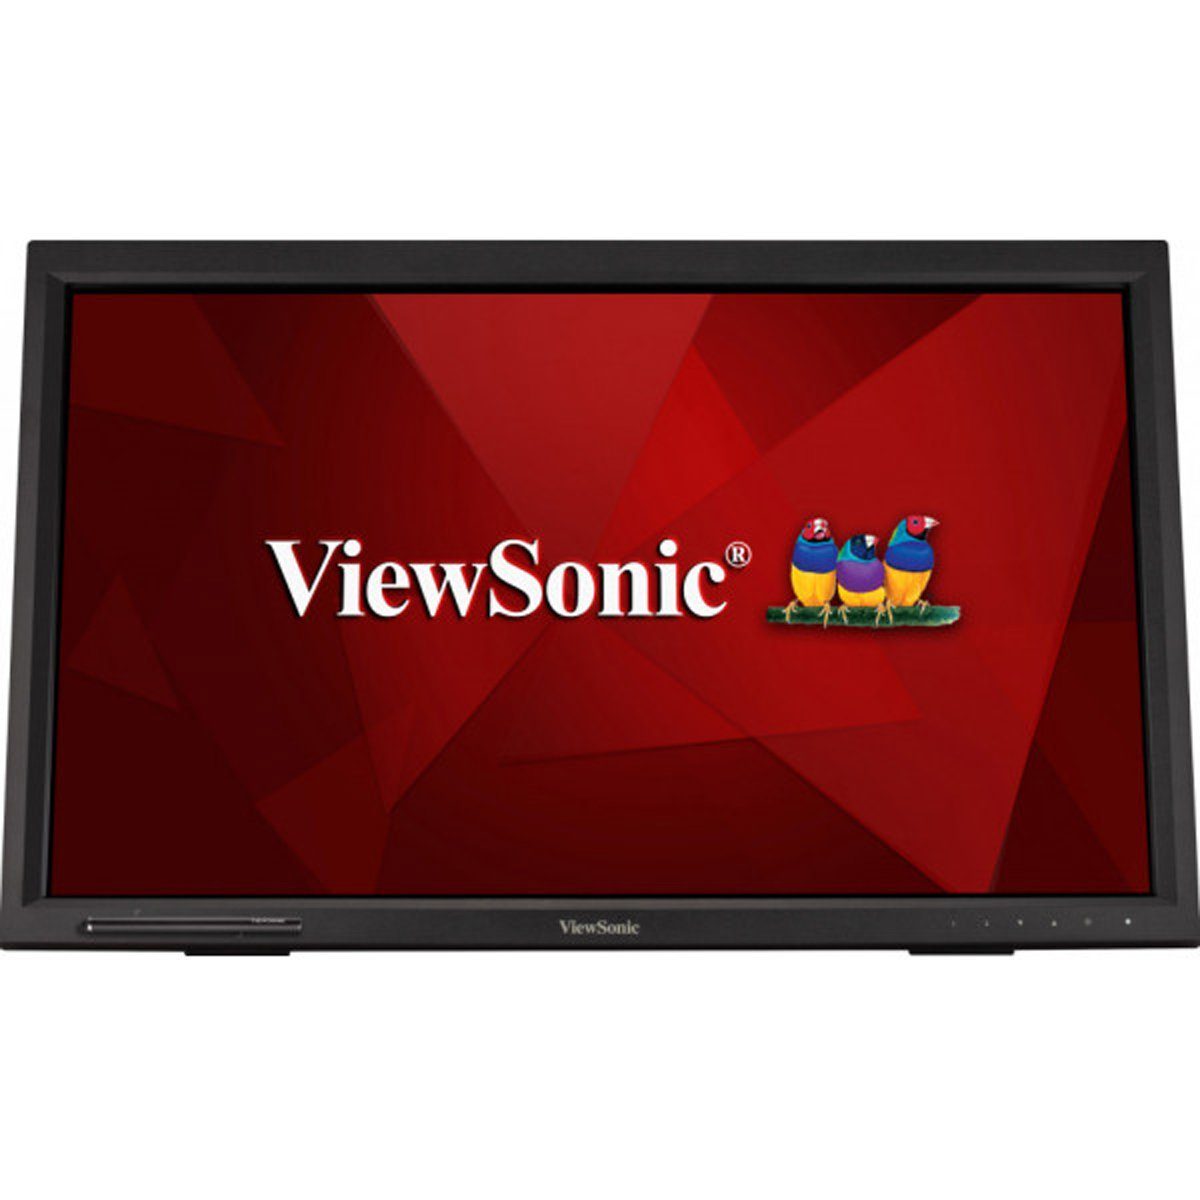 Viewsonic TD2423 LED-Monitor (61 cm/24 ", 1920 x 1080 px, 7 ms Reaktionszeit, VA, 16:9, schwarz, touch screen)